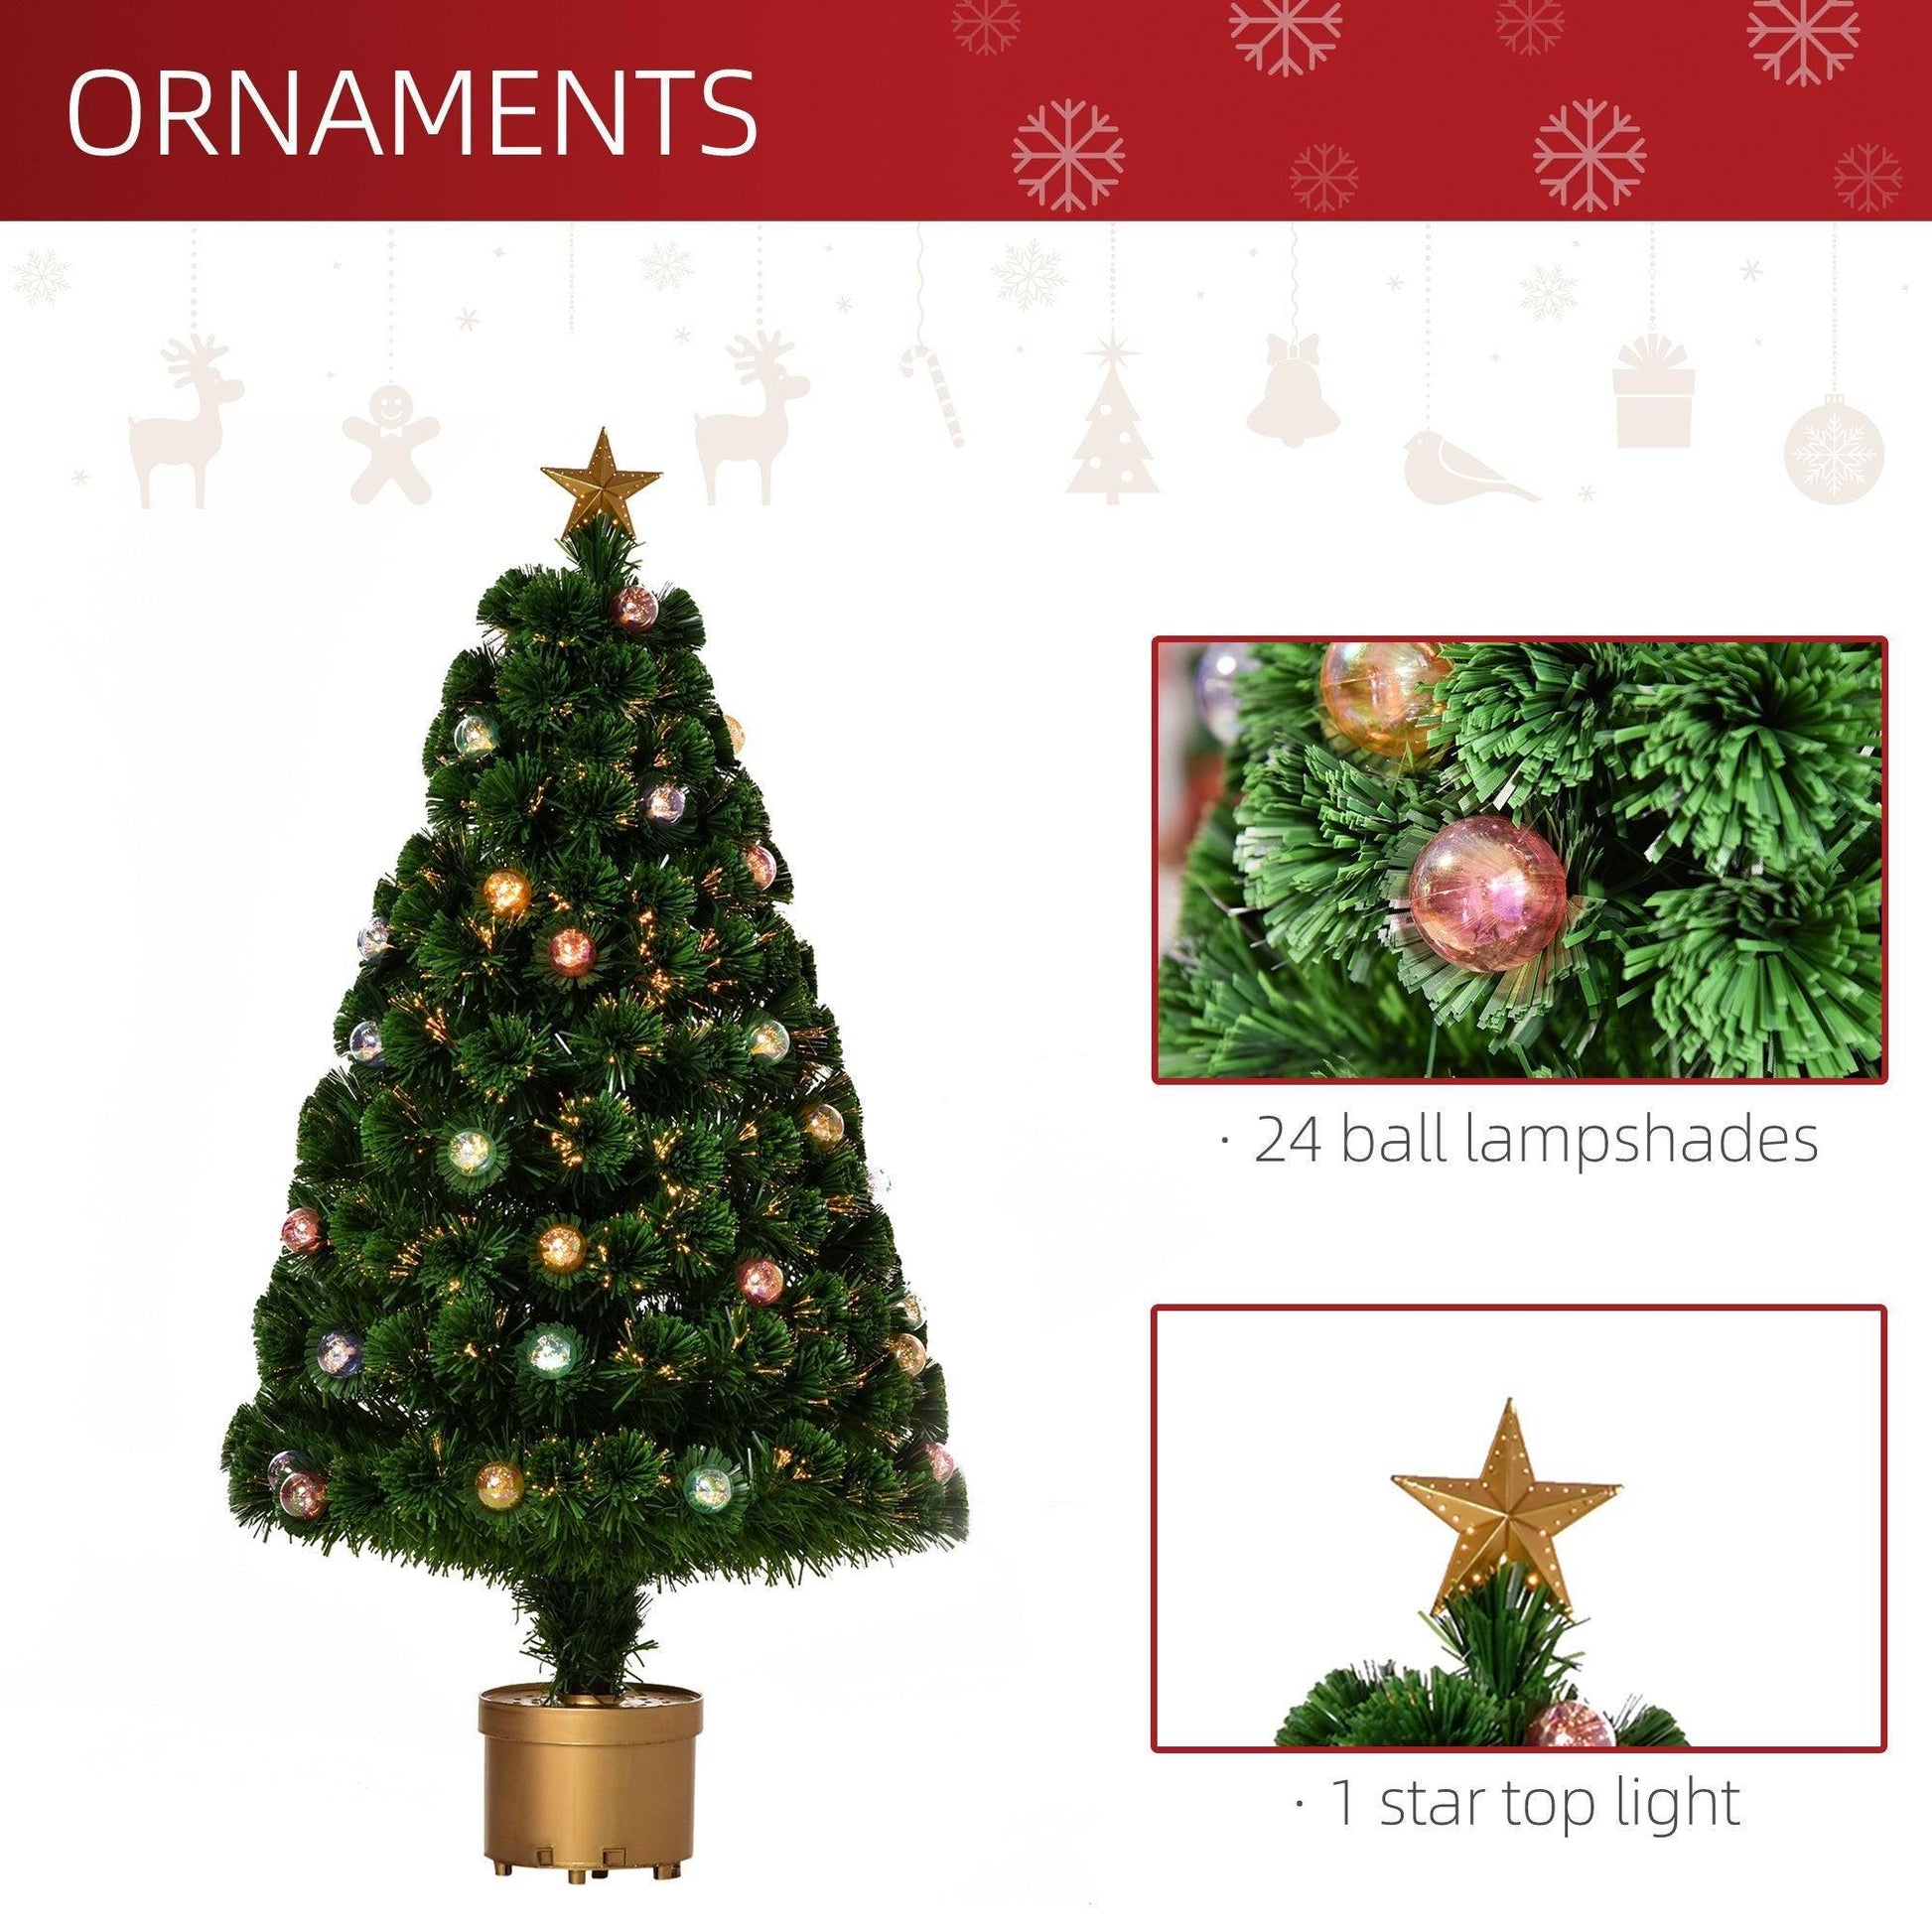 HOMCOM 3FT Pre-lit Christmas Tree: Easy Indoor Xmas Decor - ALL4U RETAILER LTD